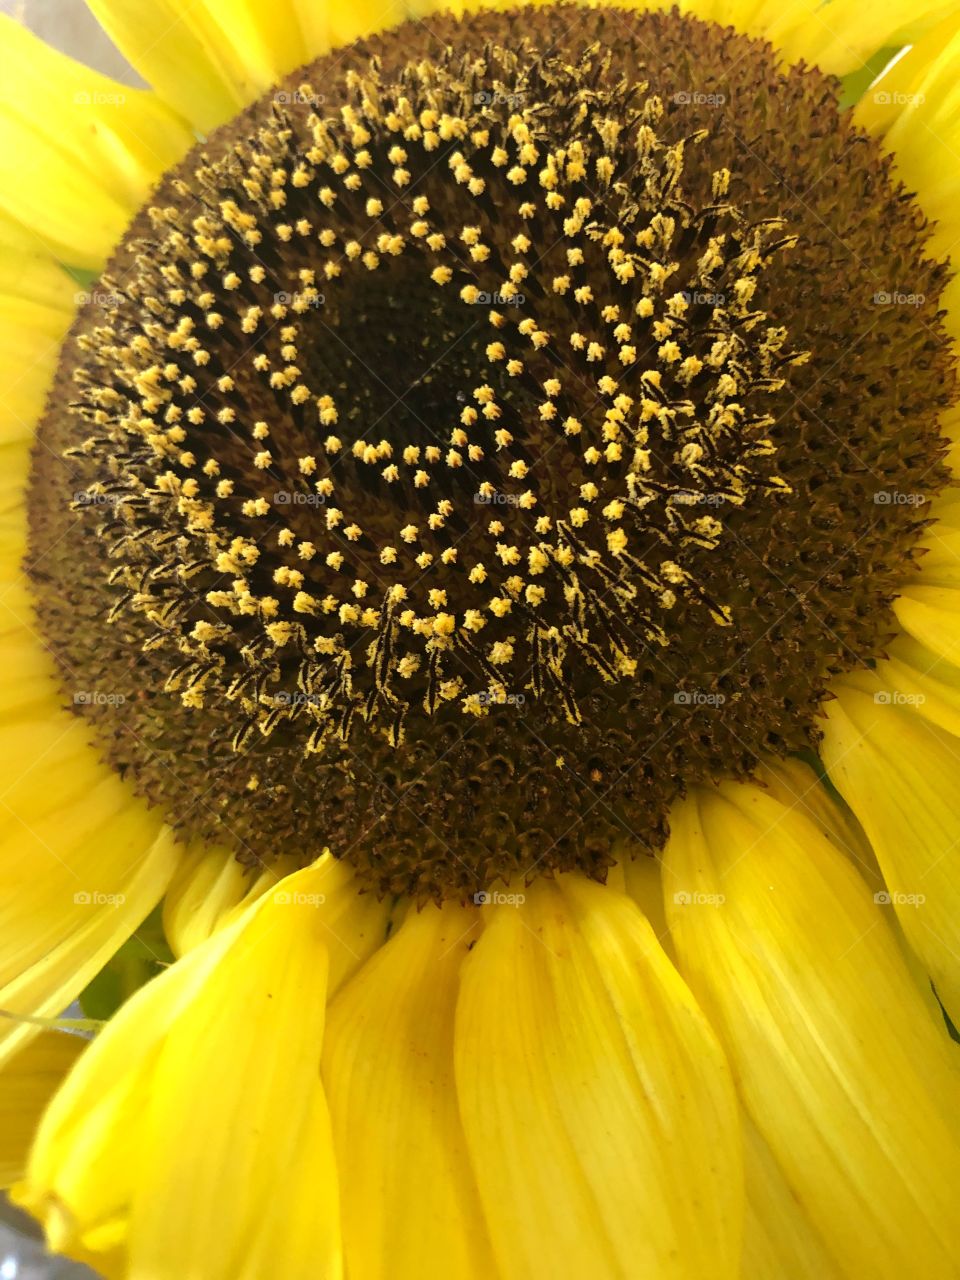 Close up sunflower